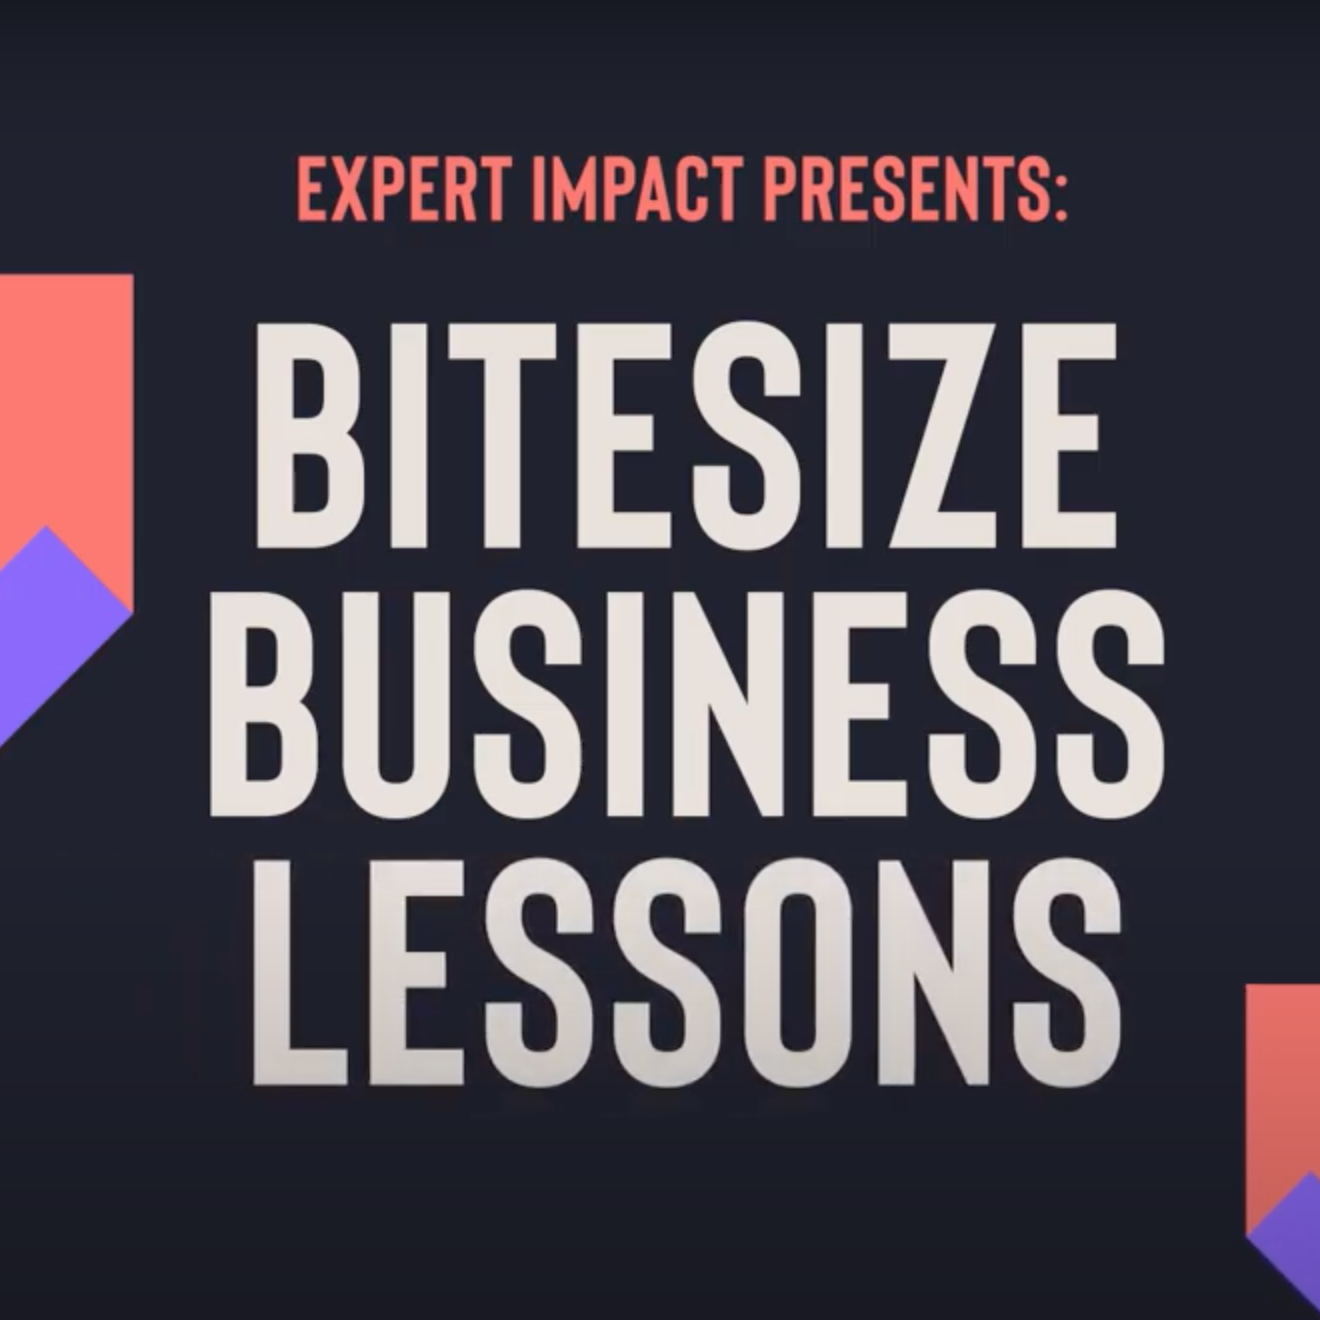 Bitesize Business Lessons